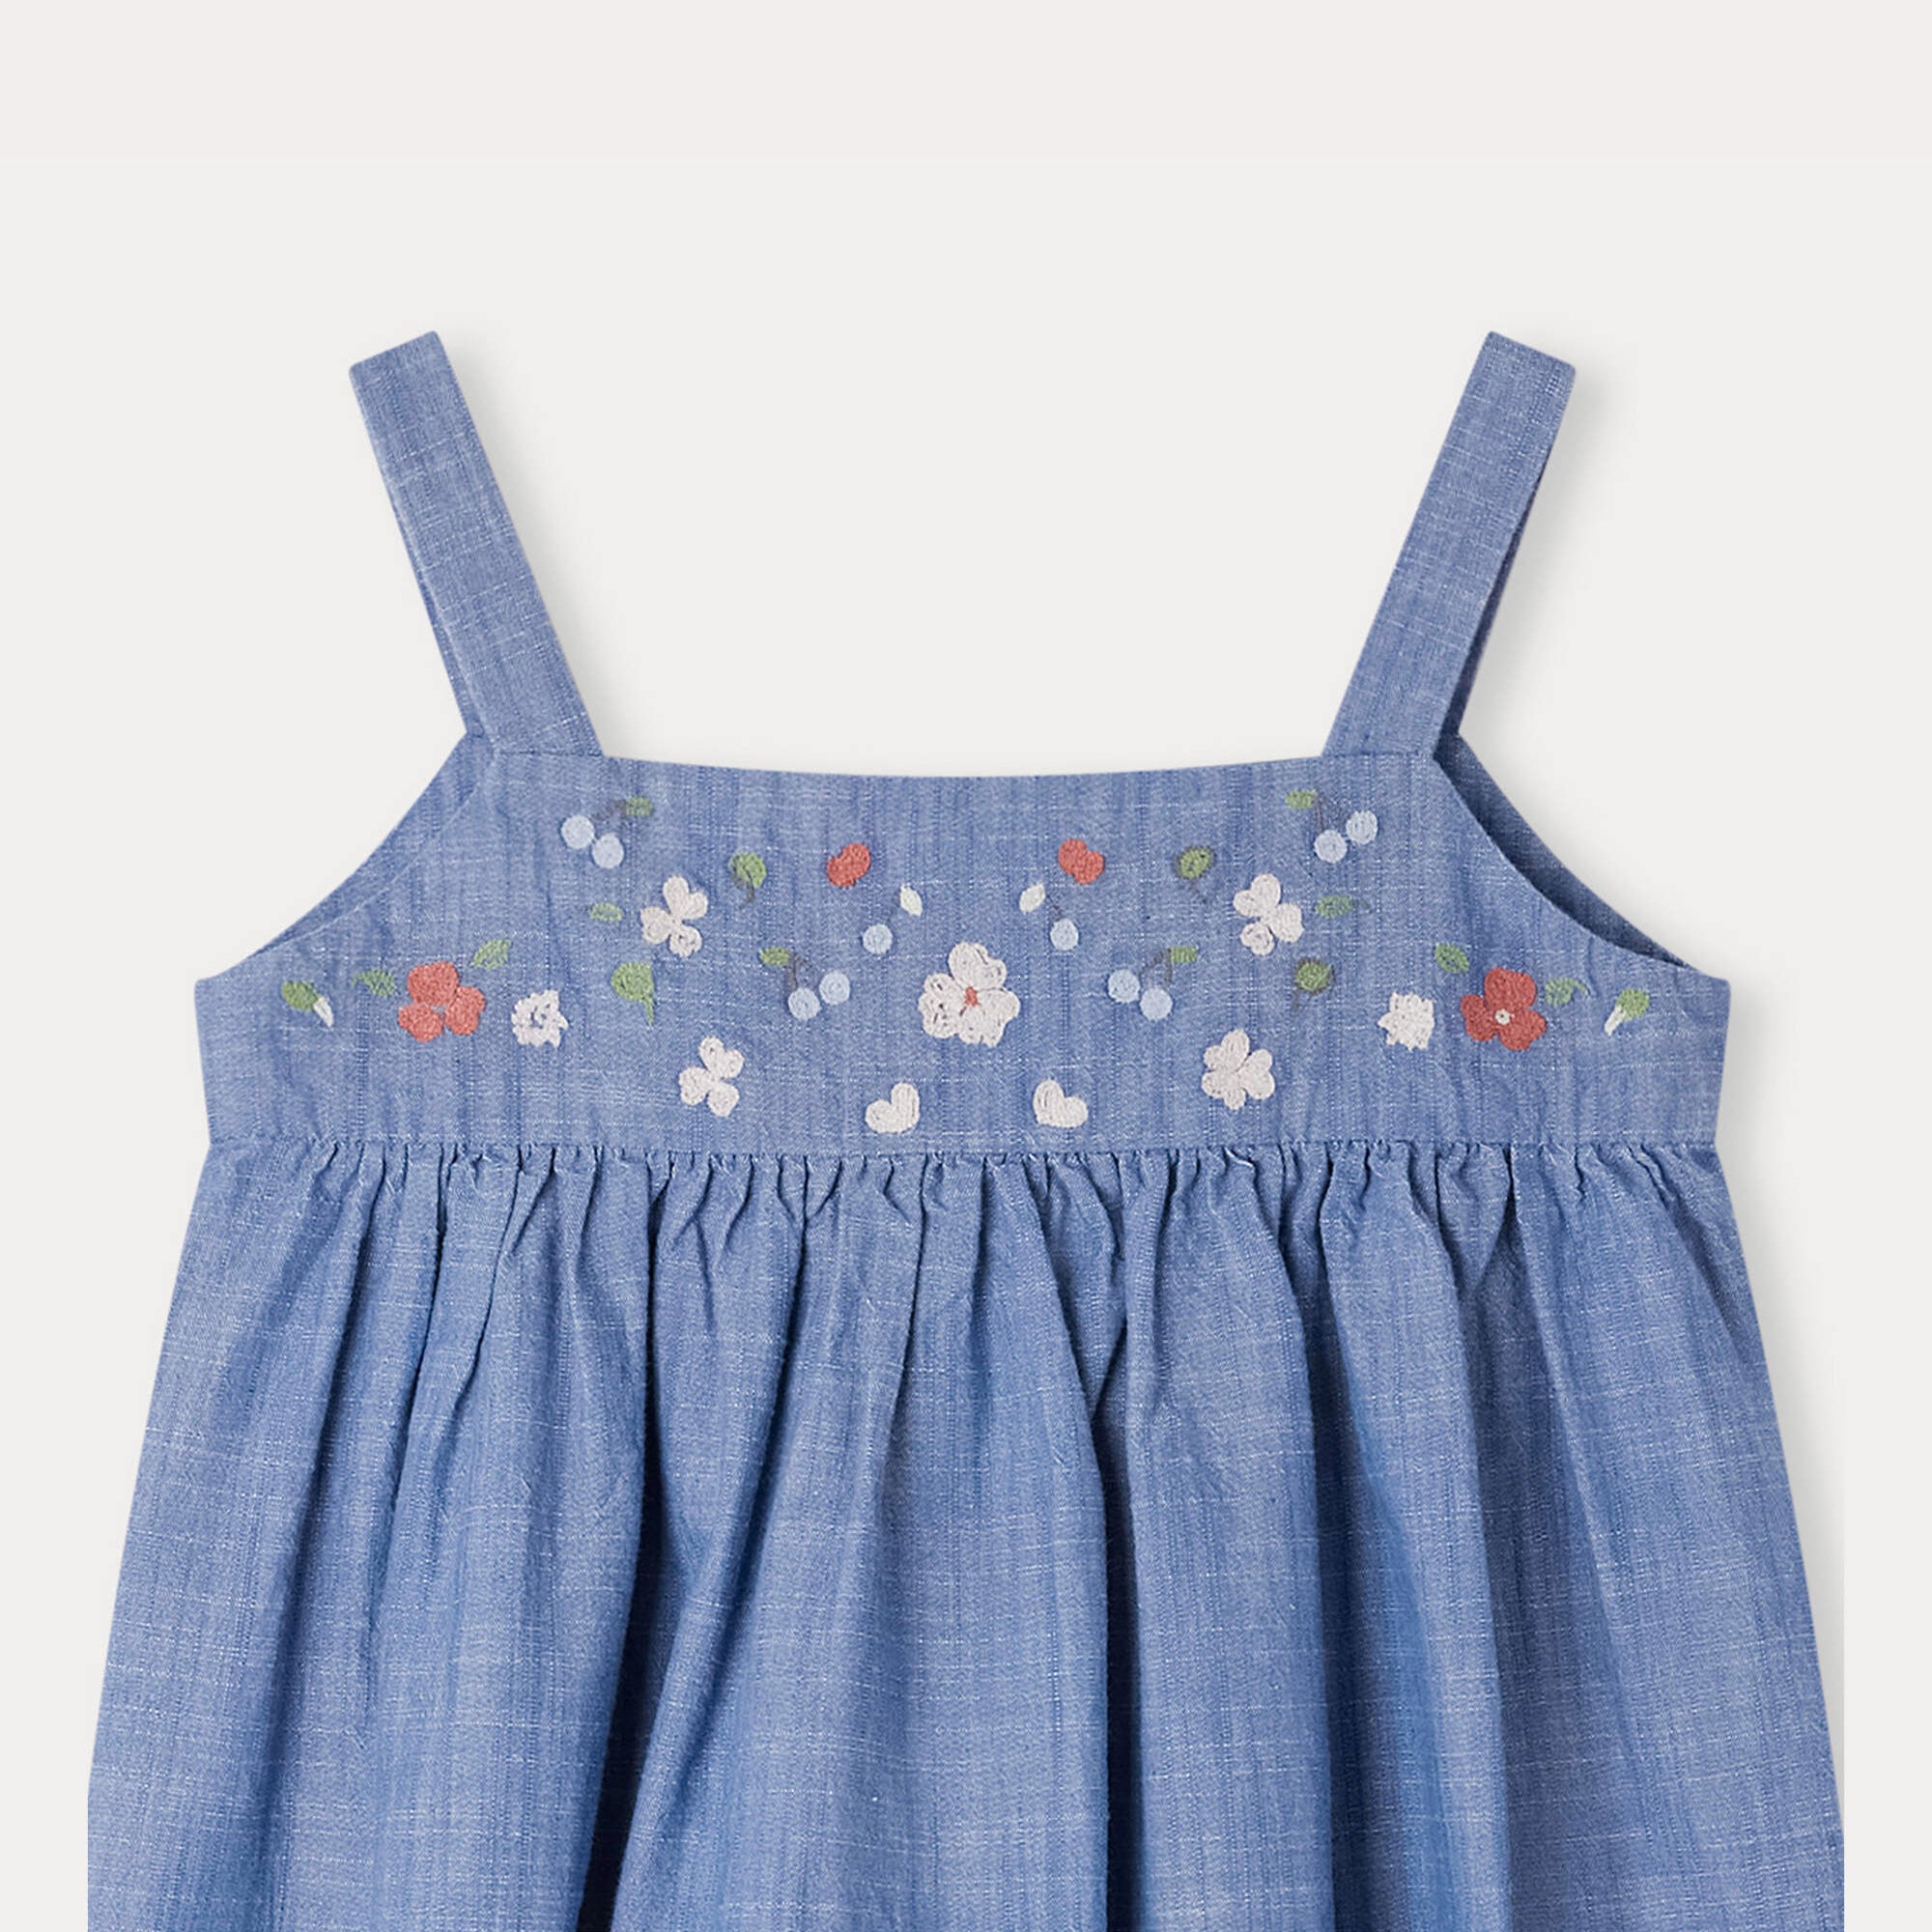 Girls Blue Embroidered Cotton Dress